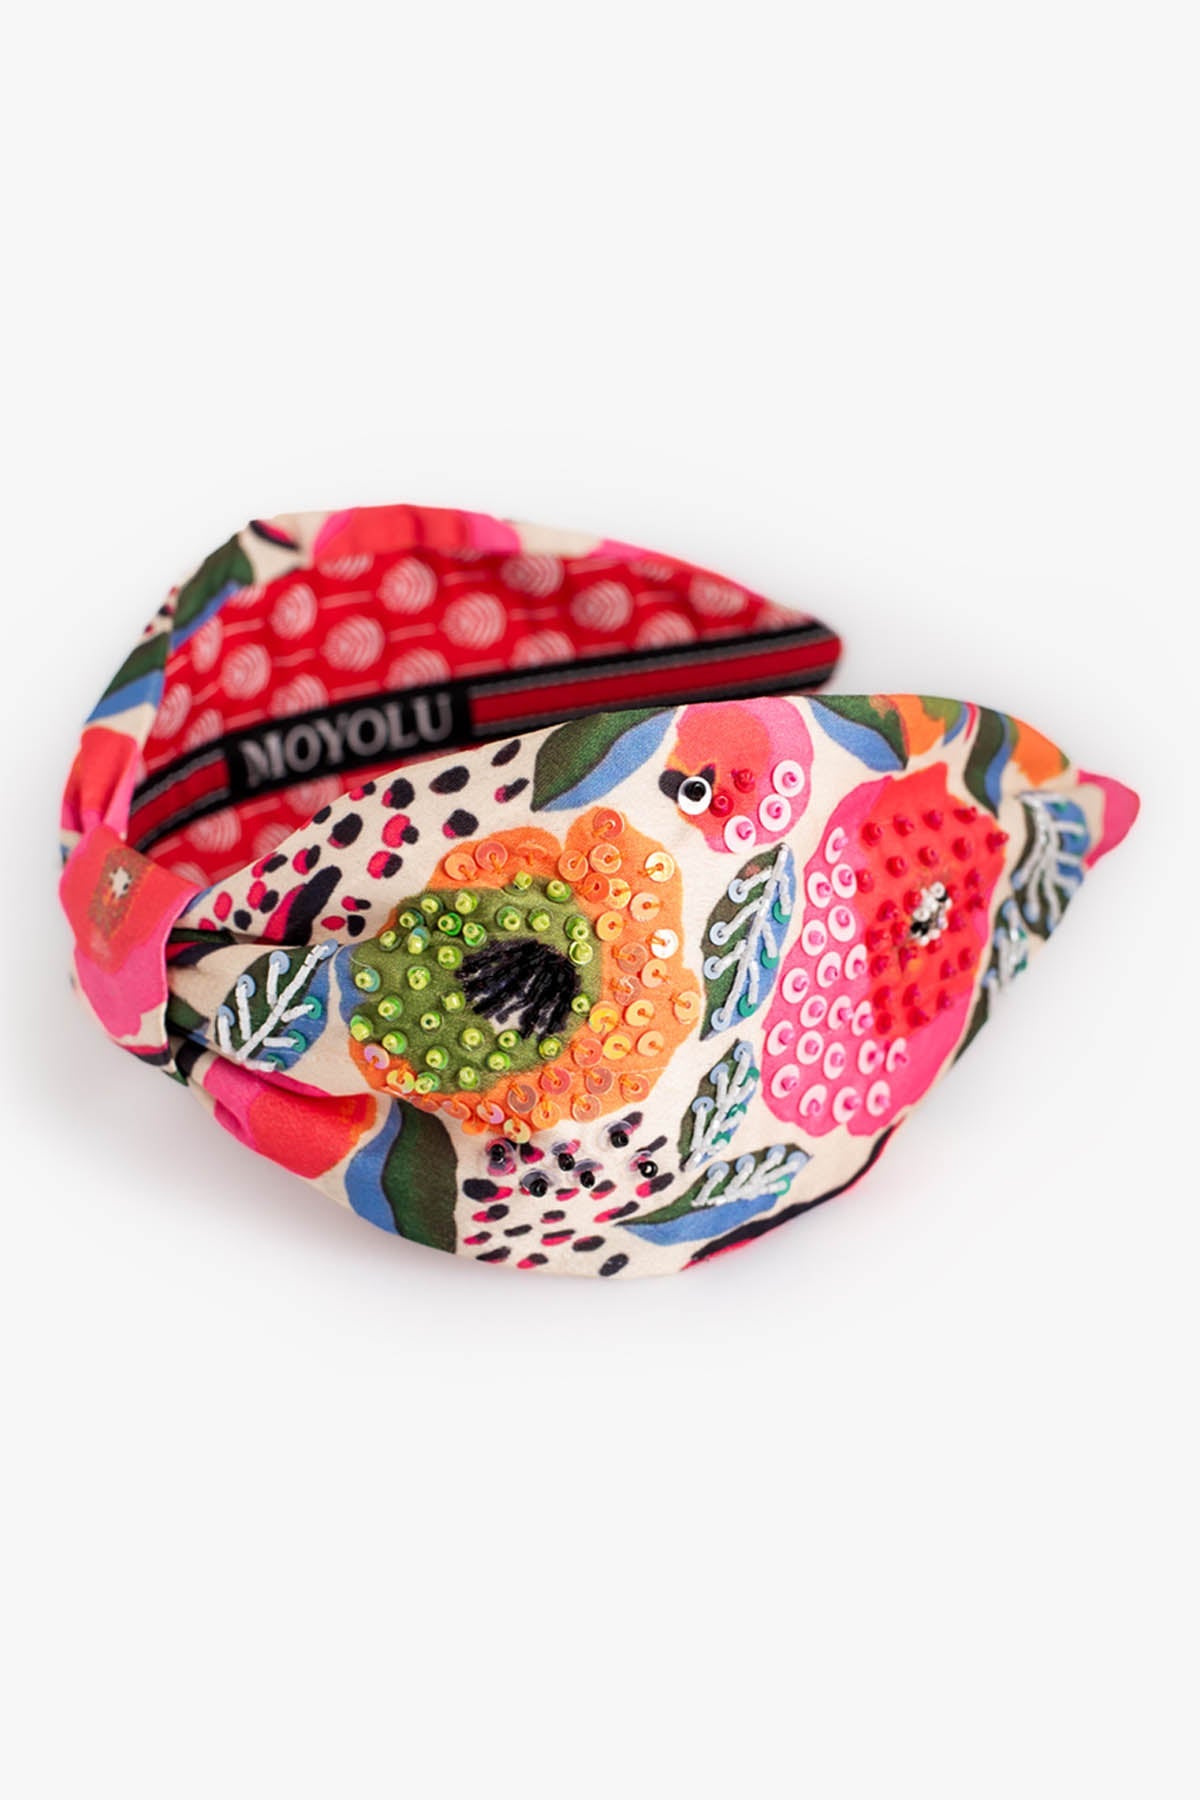 Moyolu Multicolor Flower Headband Accessories online at ScrollnShops